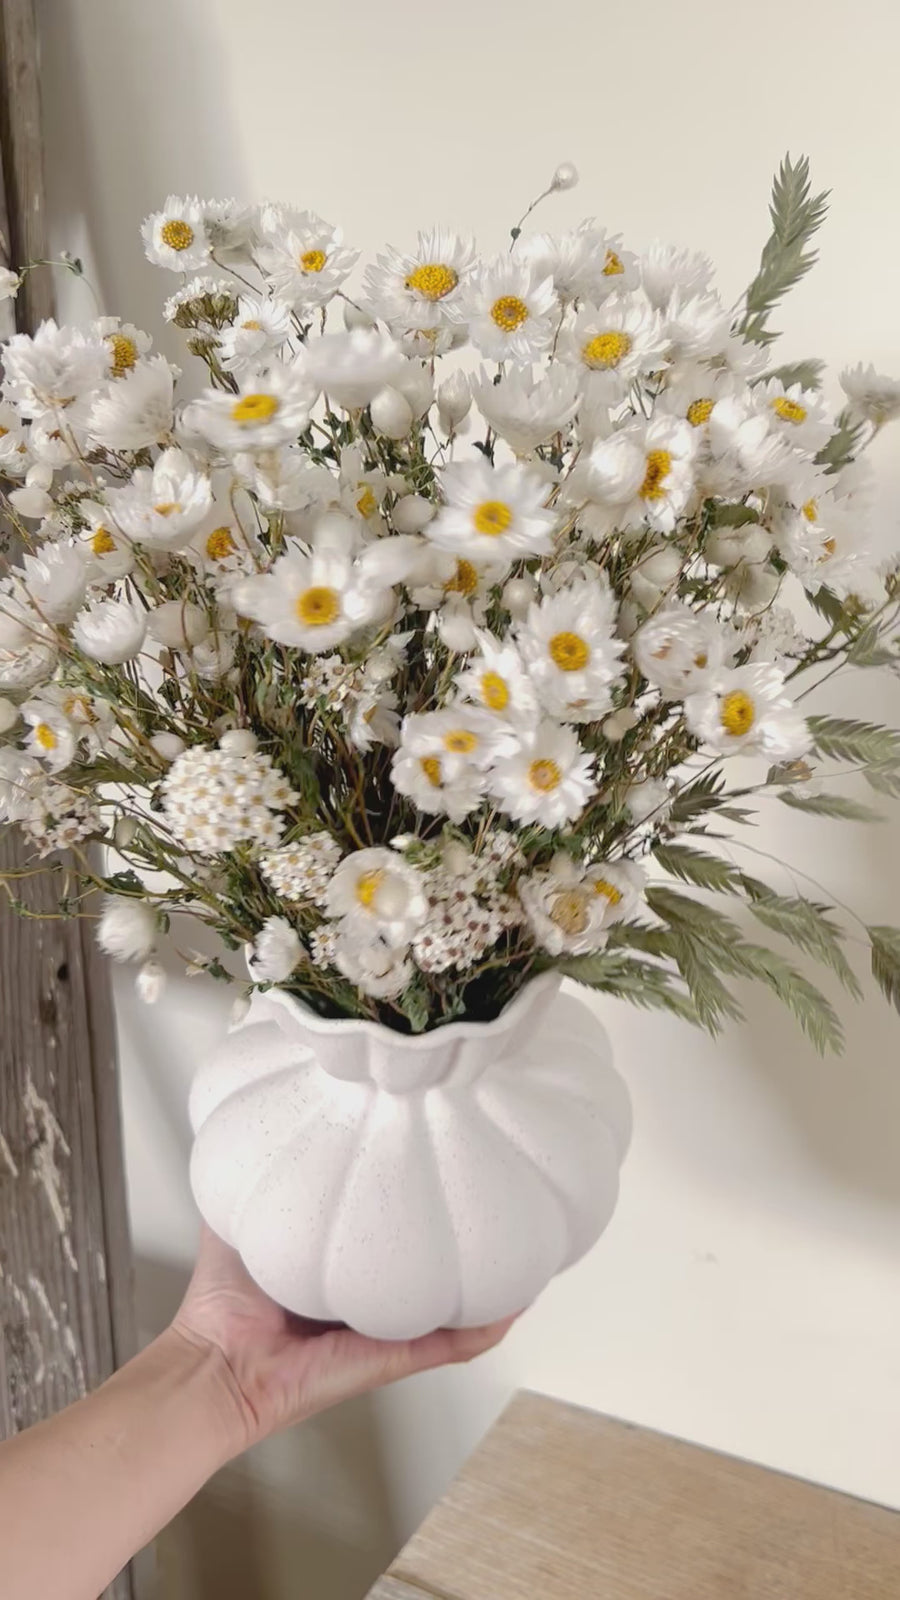 Pearl Blossom Serenity Vase Arrangement [M]neutral